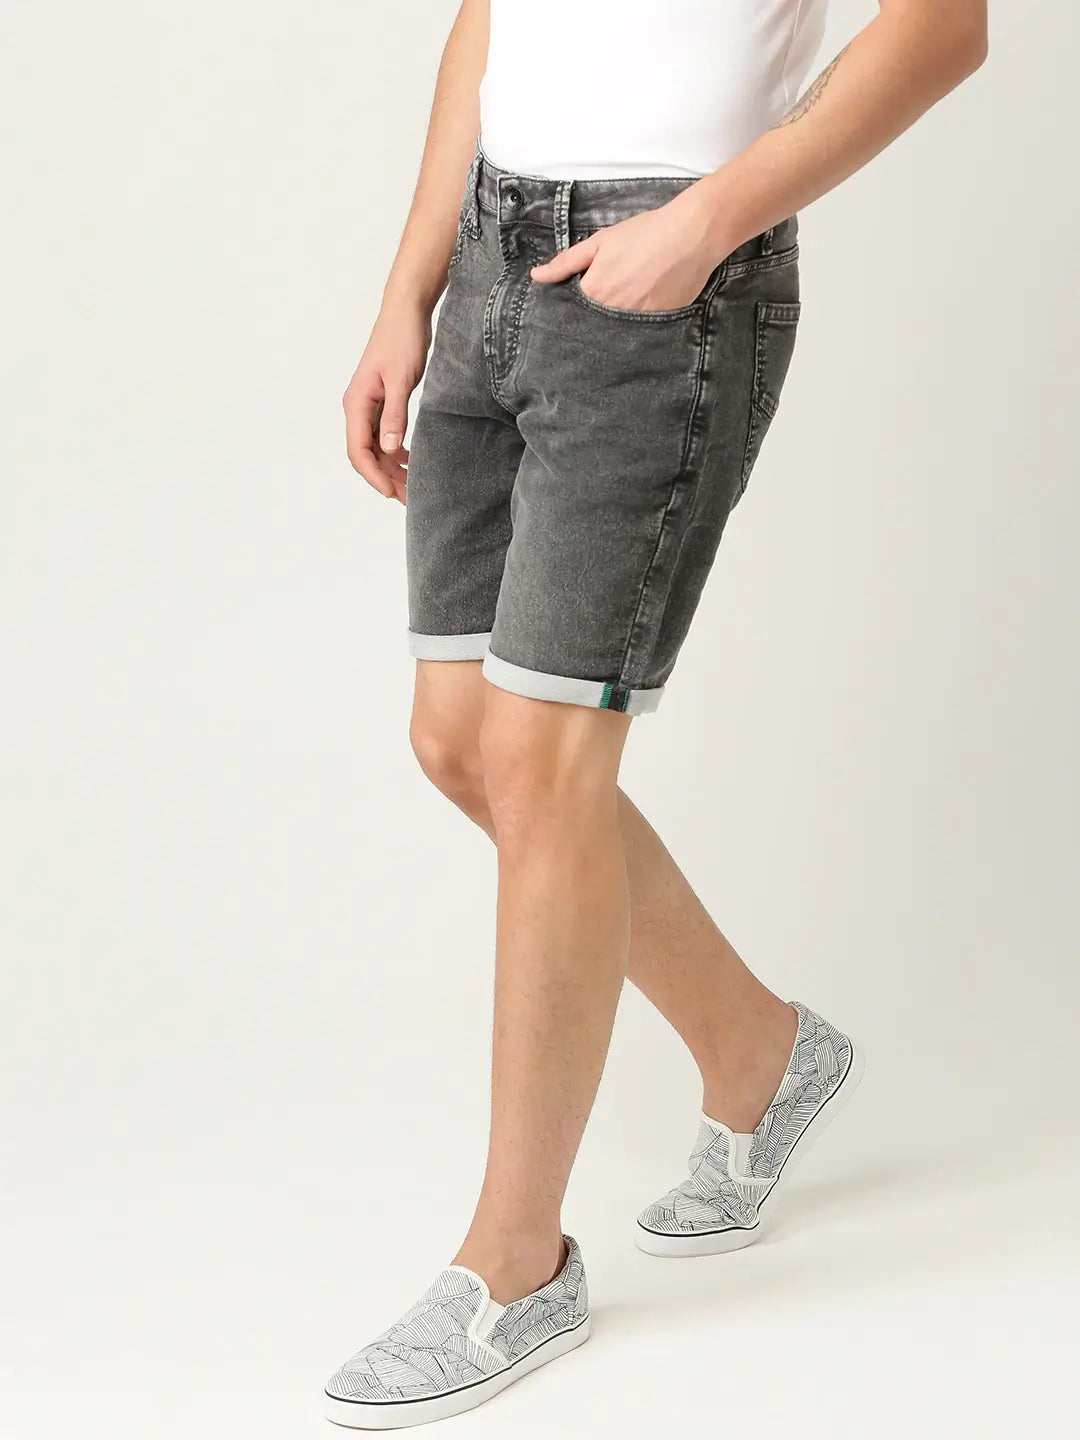 Men Charcoal Grey Solid Slim Fit Denim Shorts - Back View - AceCart